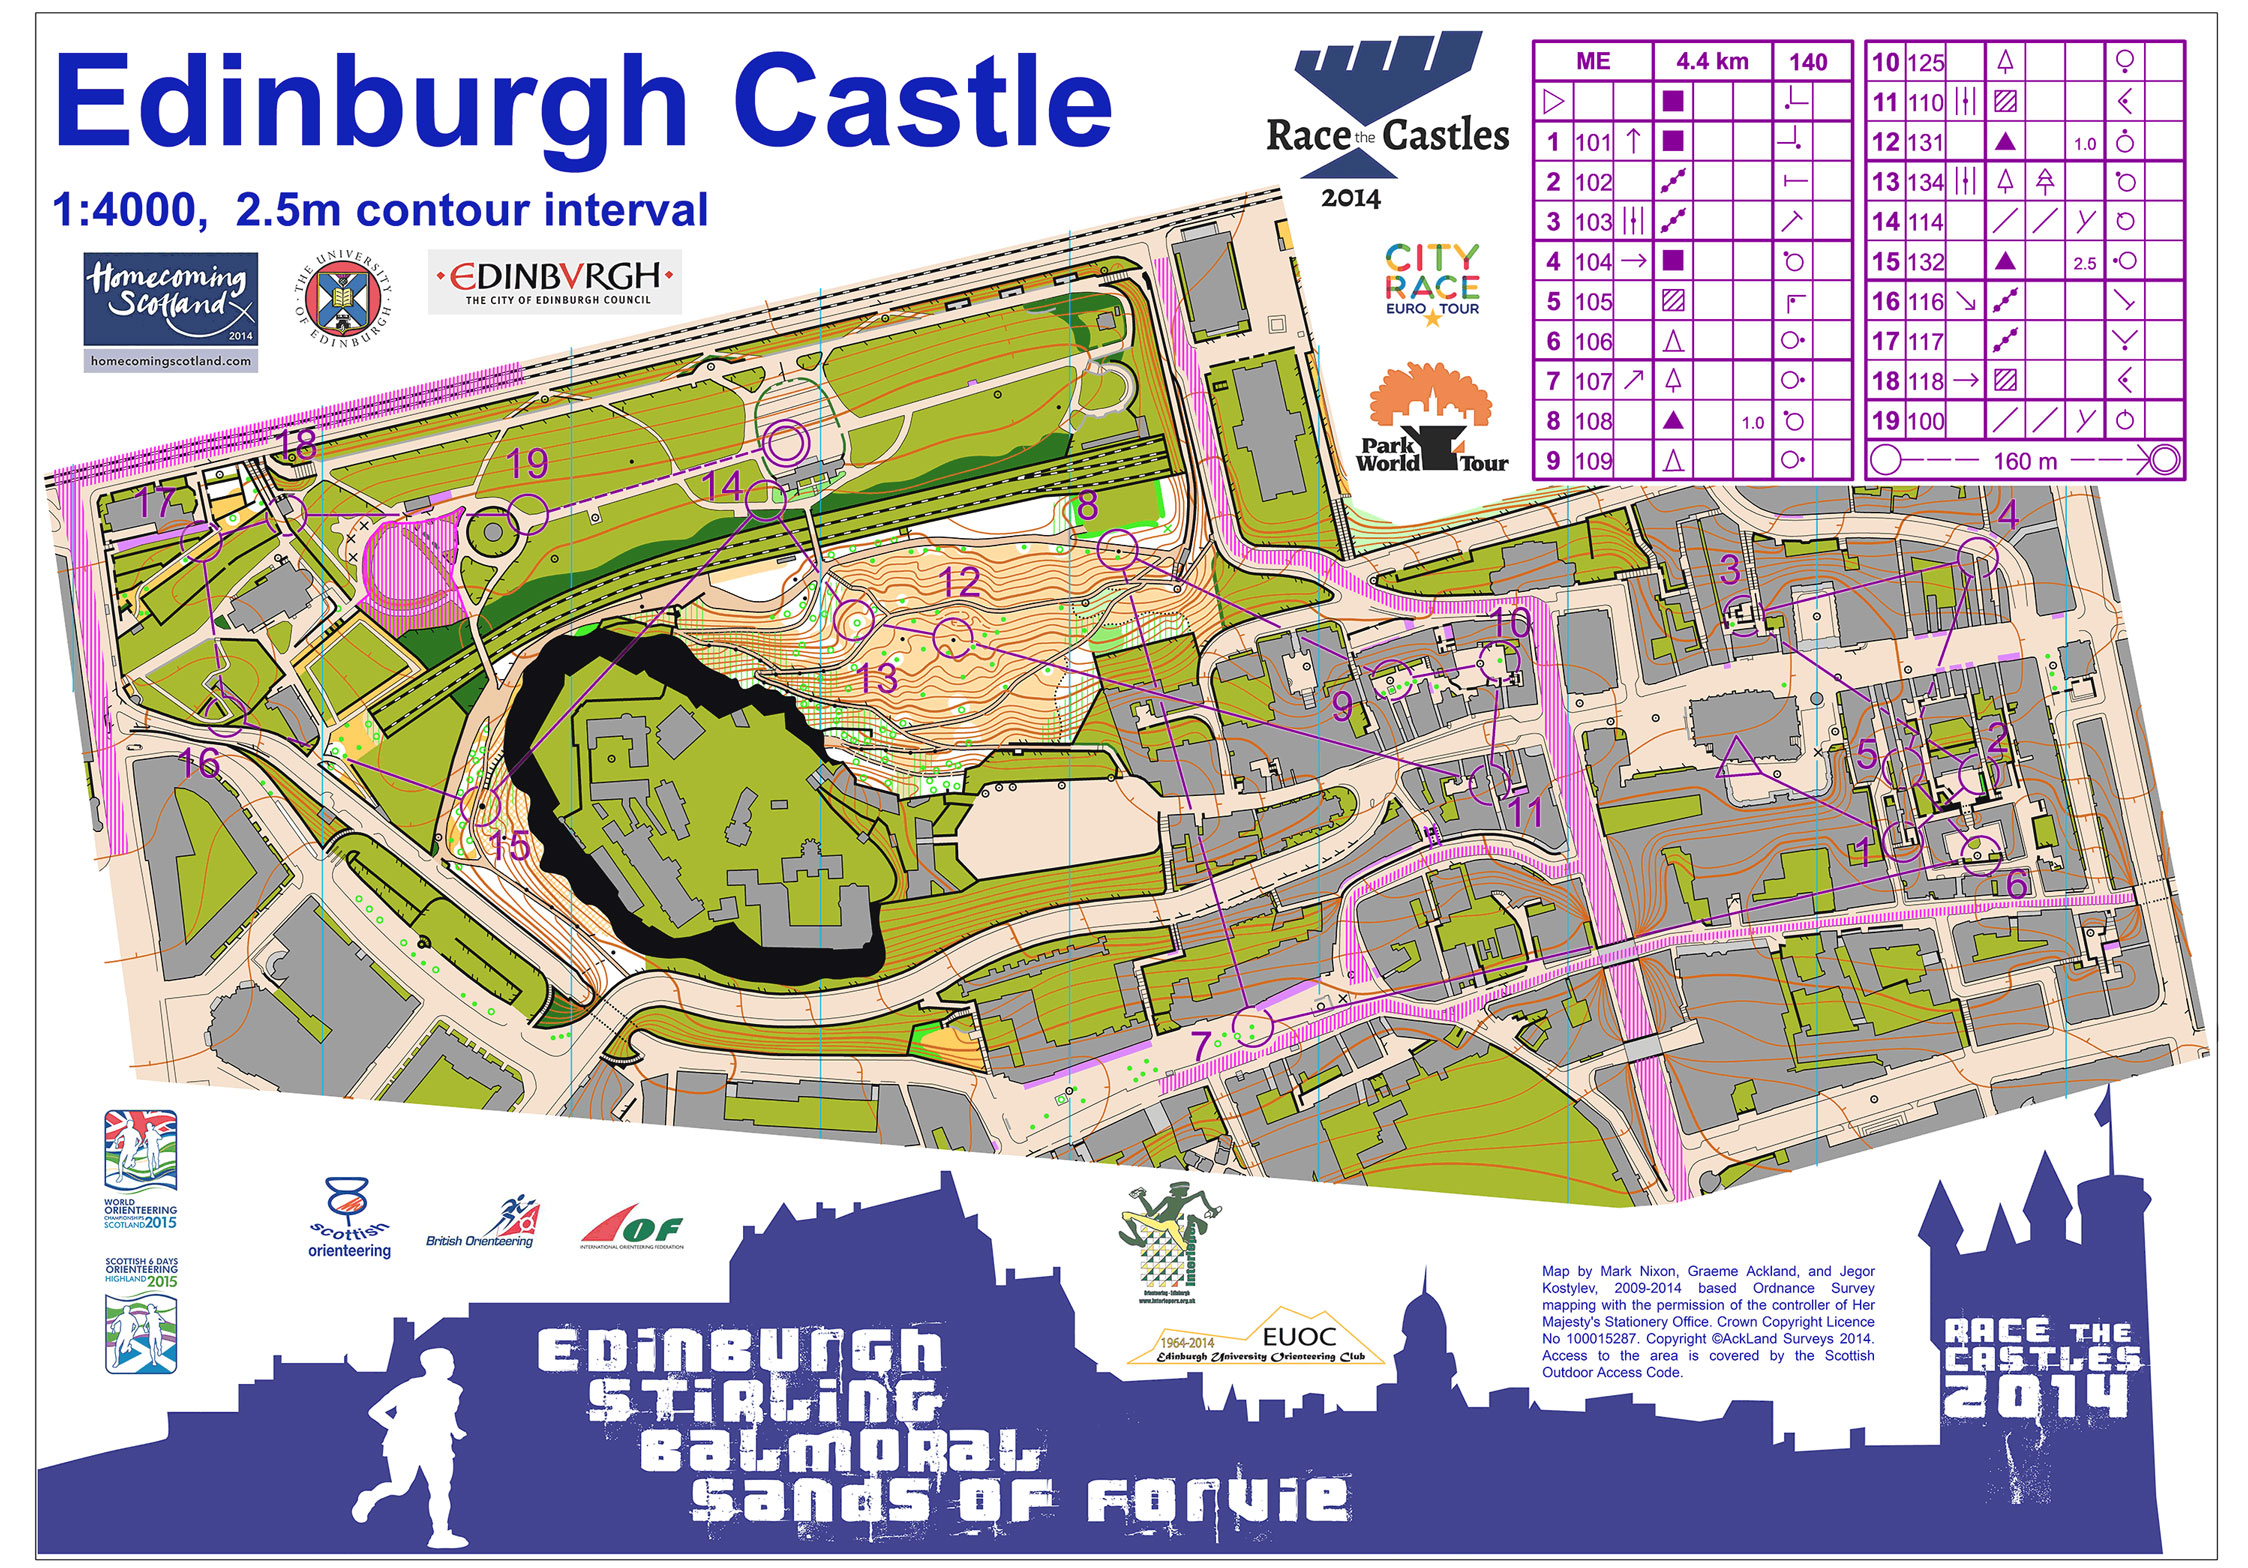 Race the Castles Edinburgh (11/10/2014)